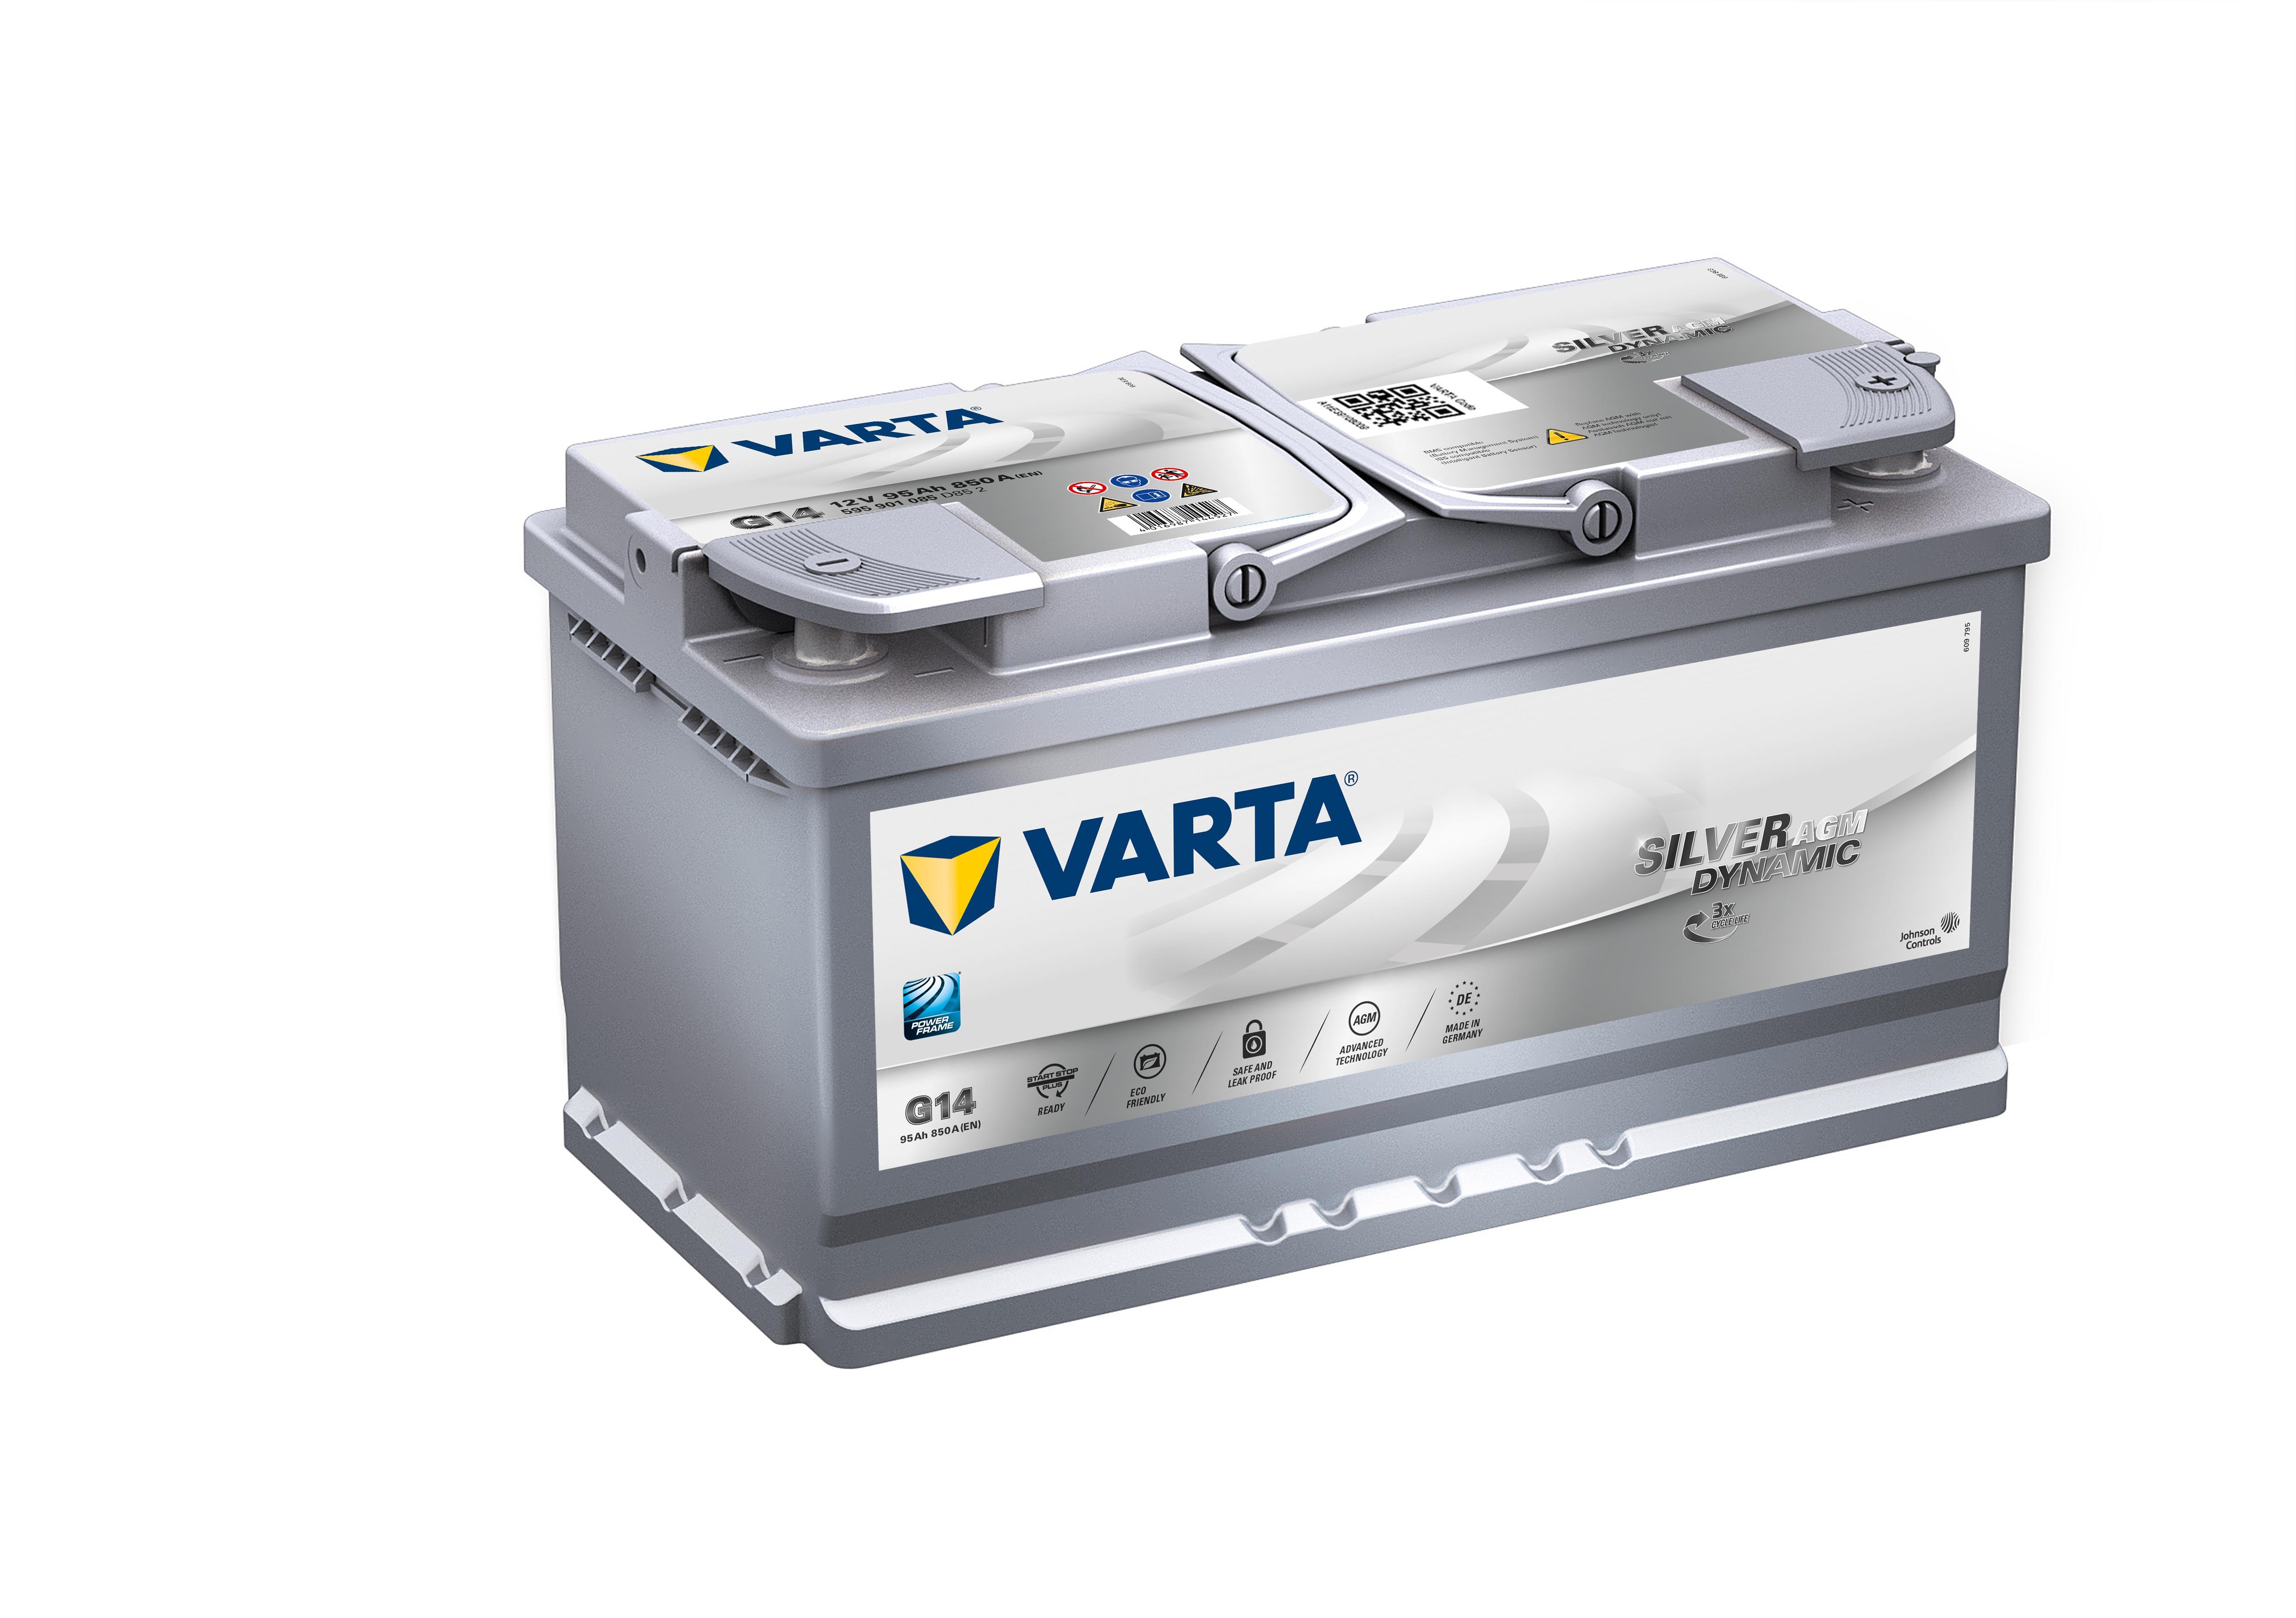 Аккумулятор автомобильный легковой. Varta start-stop Plus 6ct-80 r+. 595901085 Varta AGM. Varta Silver Dynamic g14. Varta g14 595 901 085.